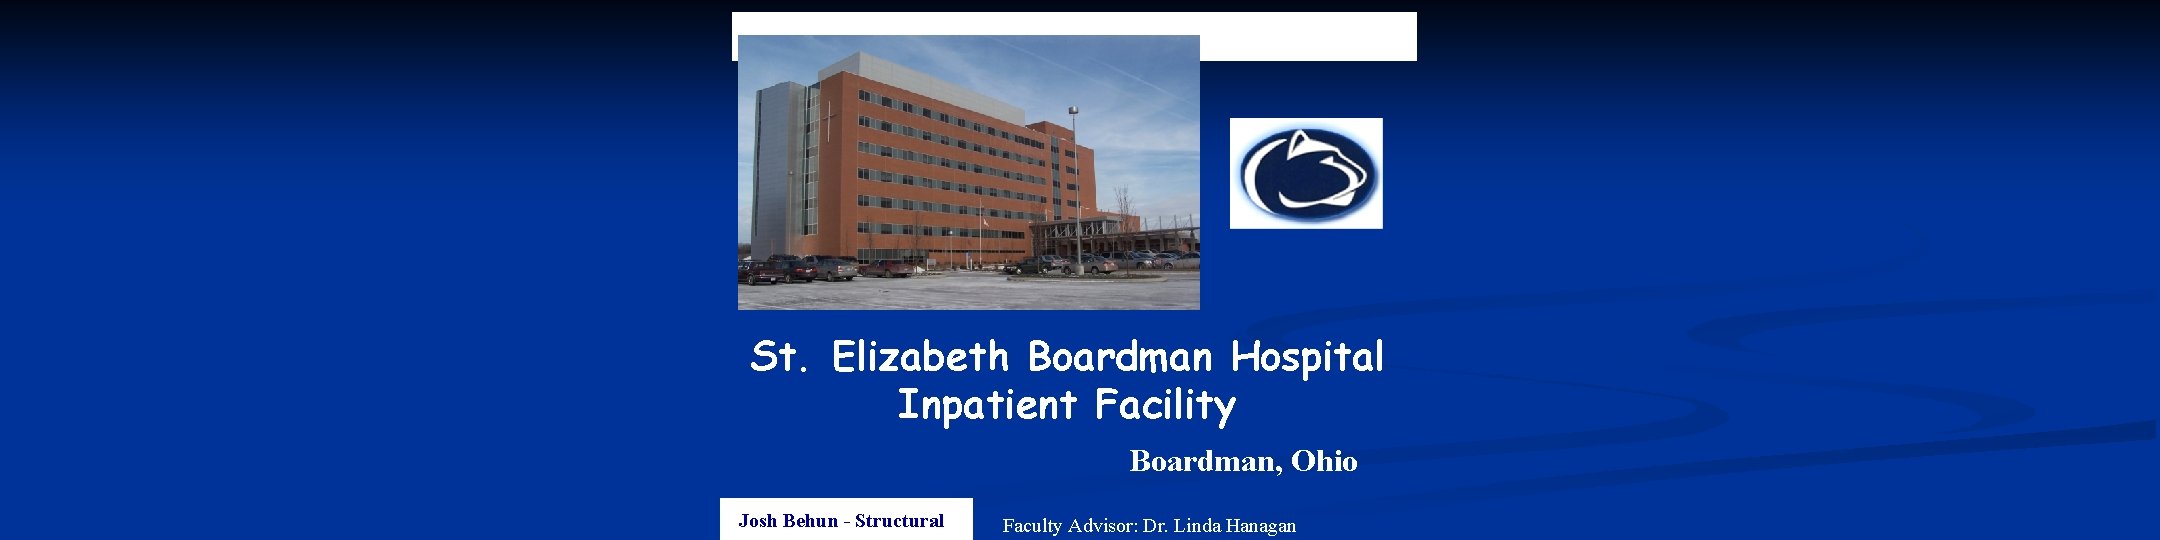 Existing Conditions St. Elizabeth Boardman Hospital Inpatient Facility Boardman, Ohio Josh Behun - Structural